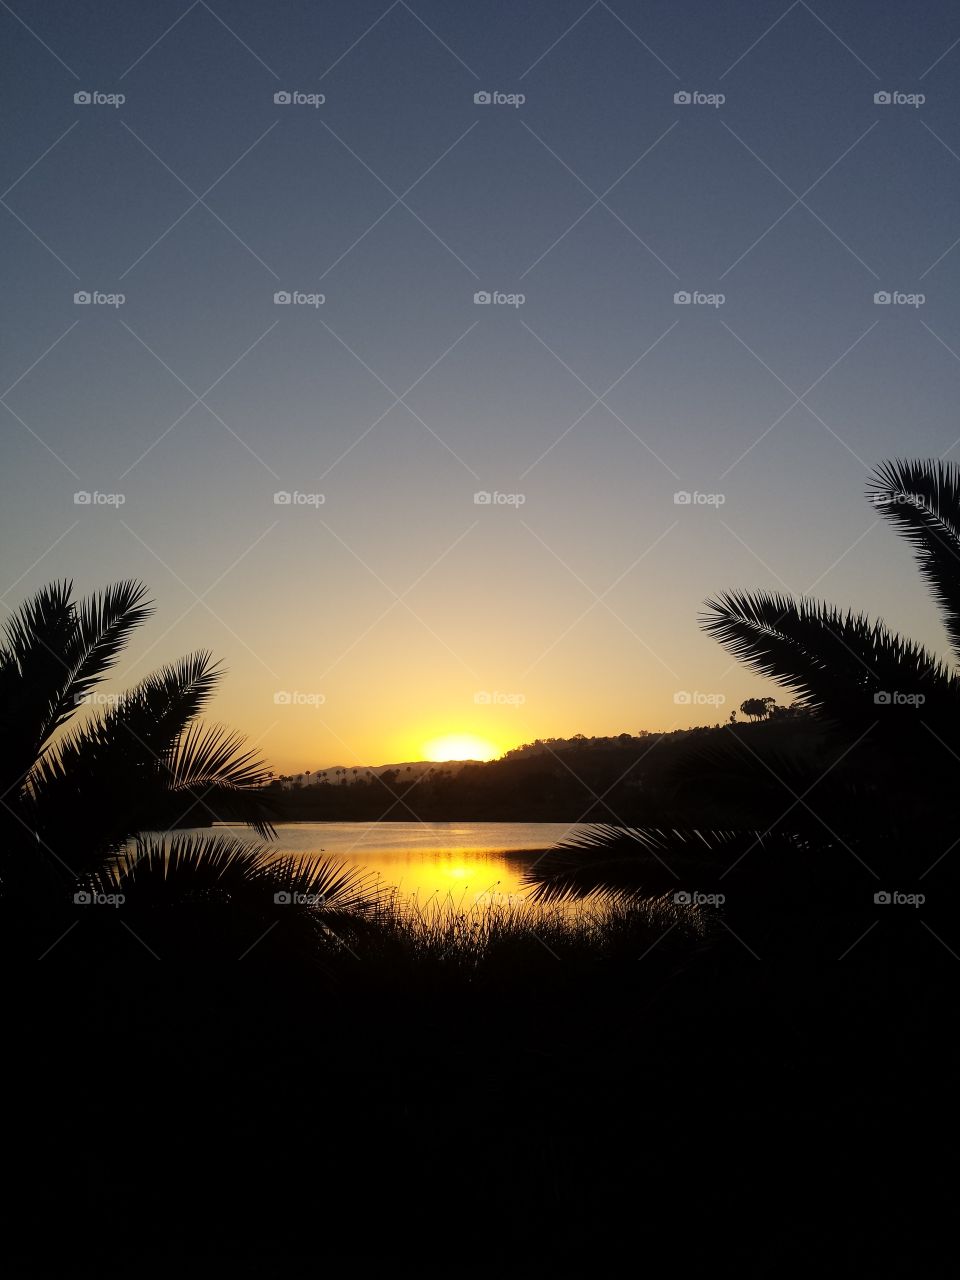 Santa Barbara and the setting sun